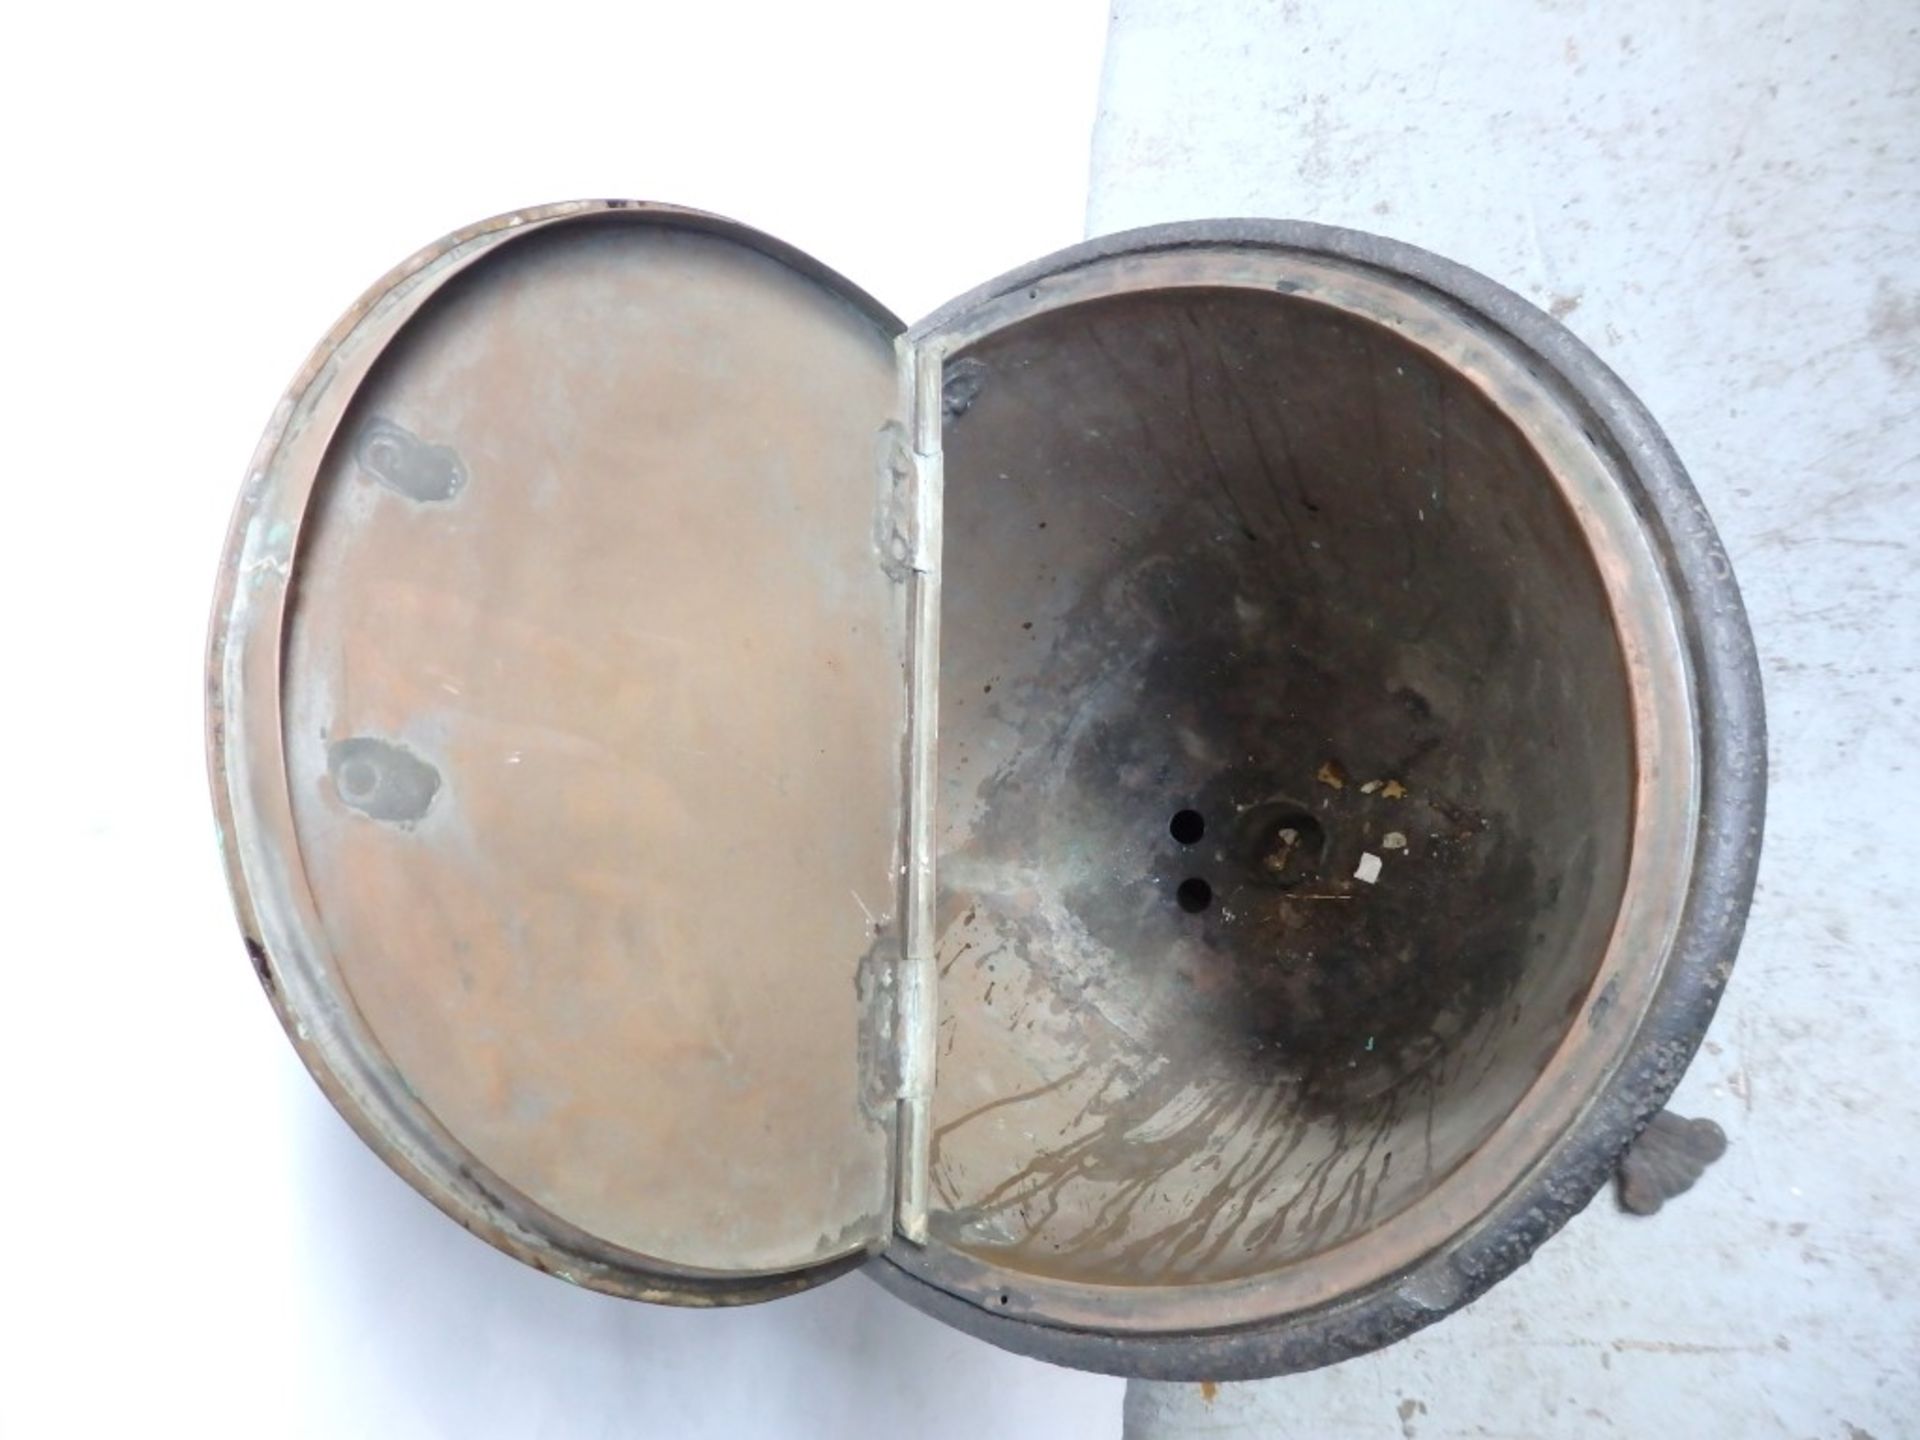 1 x Reclaimed Antique Cast Iron SAMOVAR / TEA URN - Dimensions: H70, Diameter 48cm - Ref VI004 - - Image 3 of 8